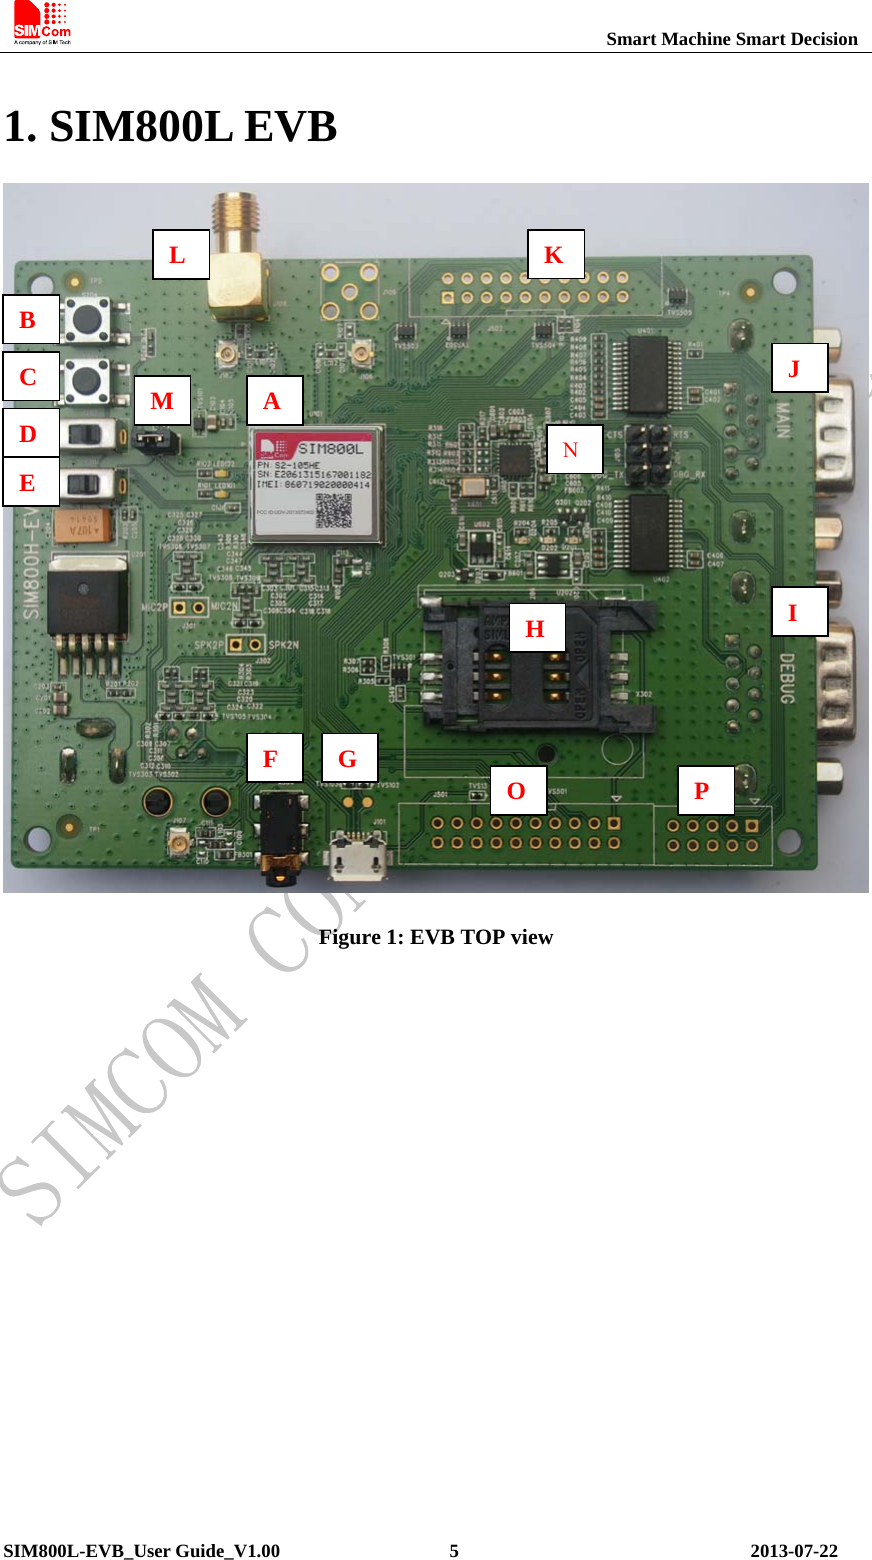                                                          Smart Machine Smart Decision SIM800L-EVB_User Guide_V1.00                  5                               2013-07-22   1. SIM800L EVB  Figure 1: EVB TOP view  A A B C D E M L J I H N F  G  O  P K 